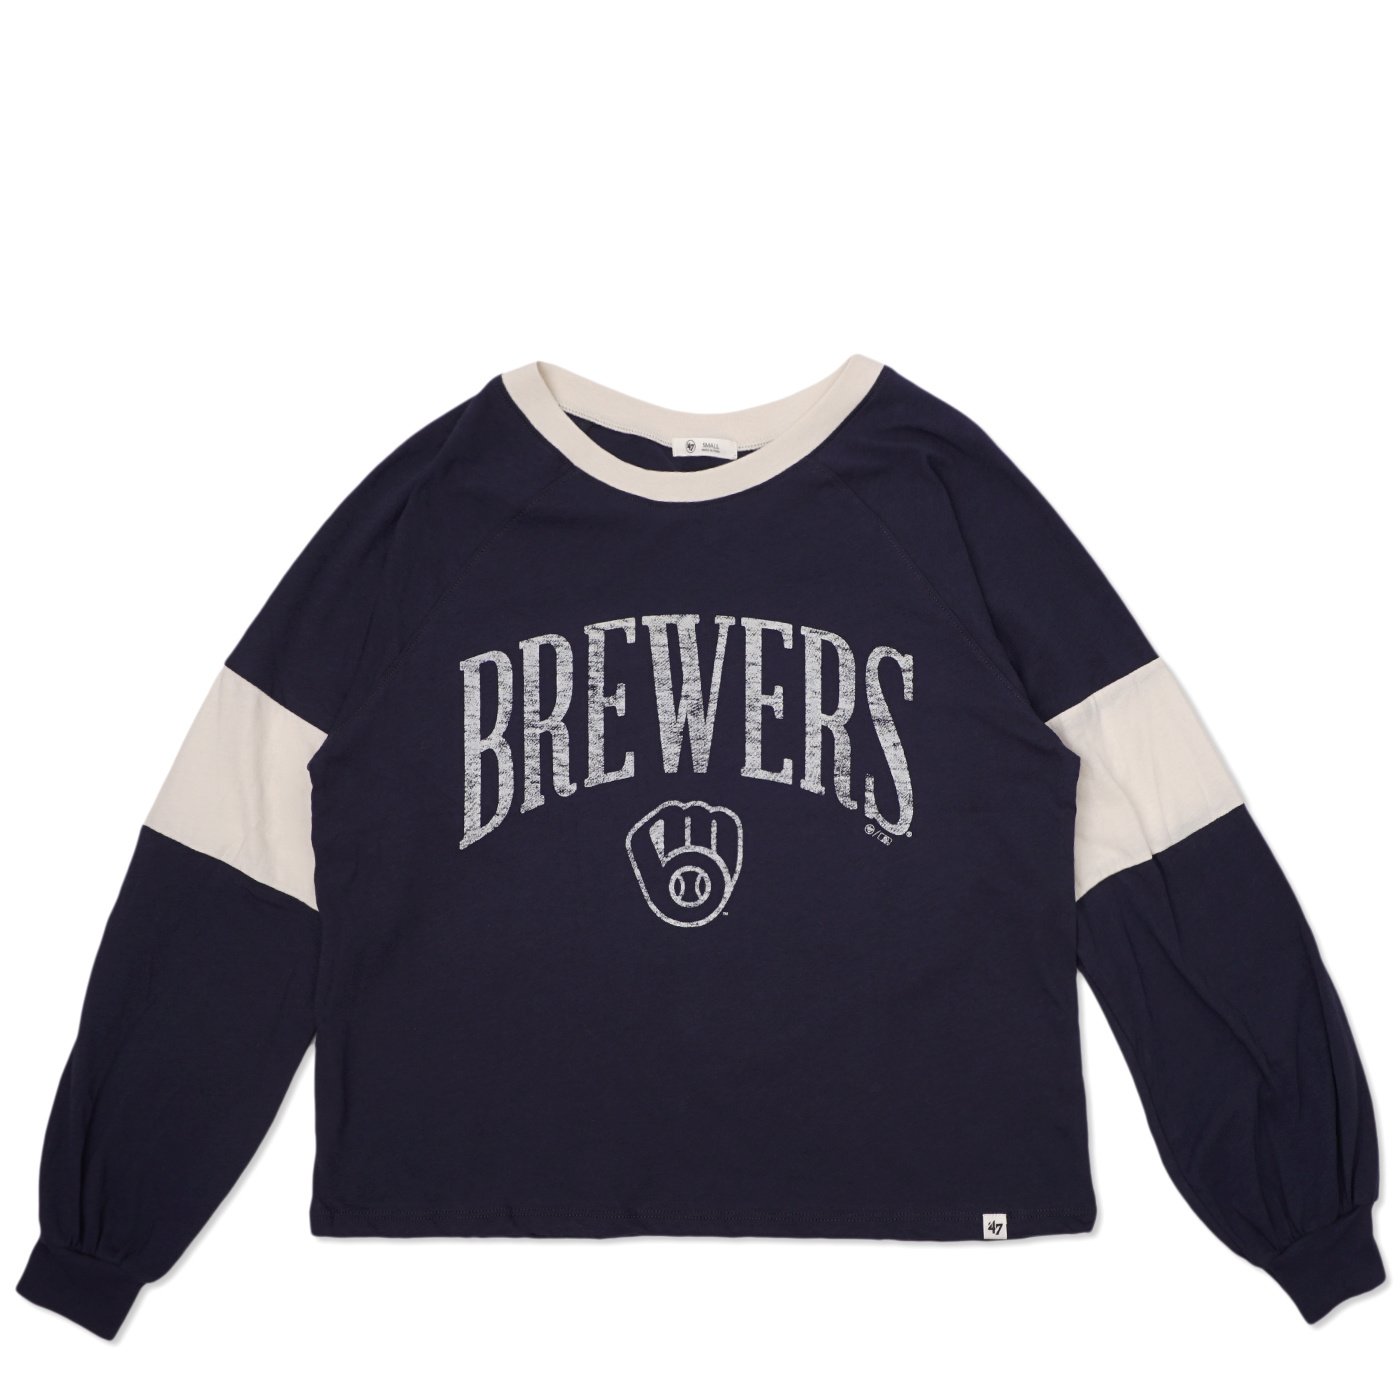 brewers long sleeve shirt